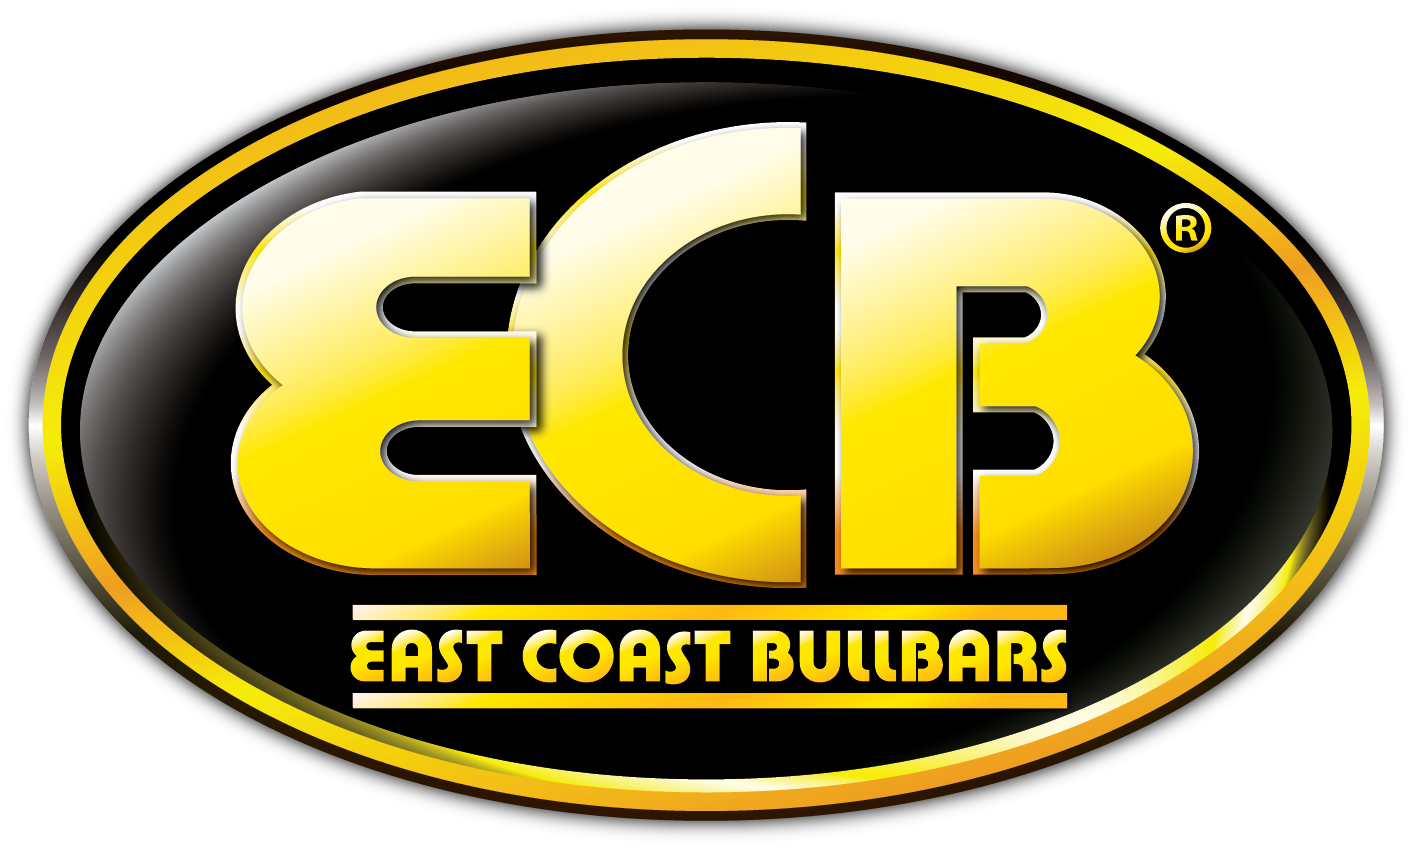 East Coast Bullbars logo.png